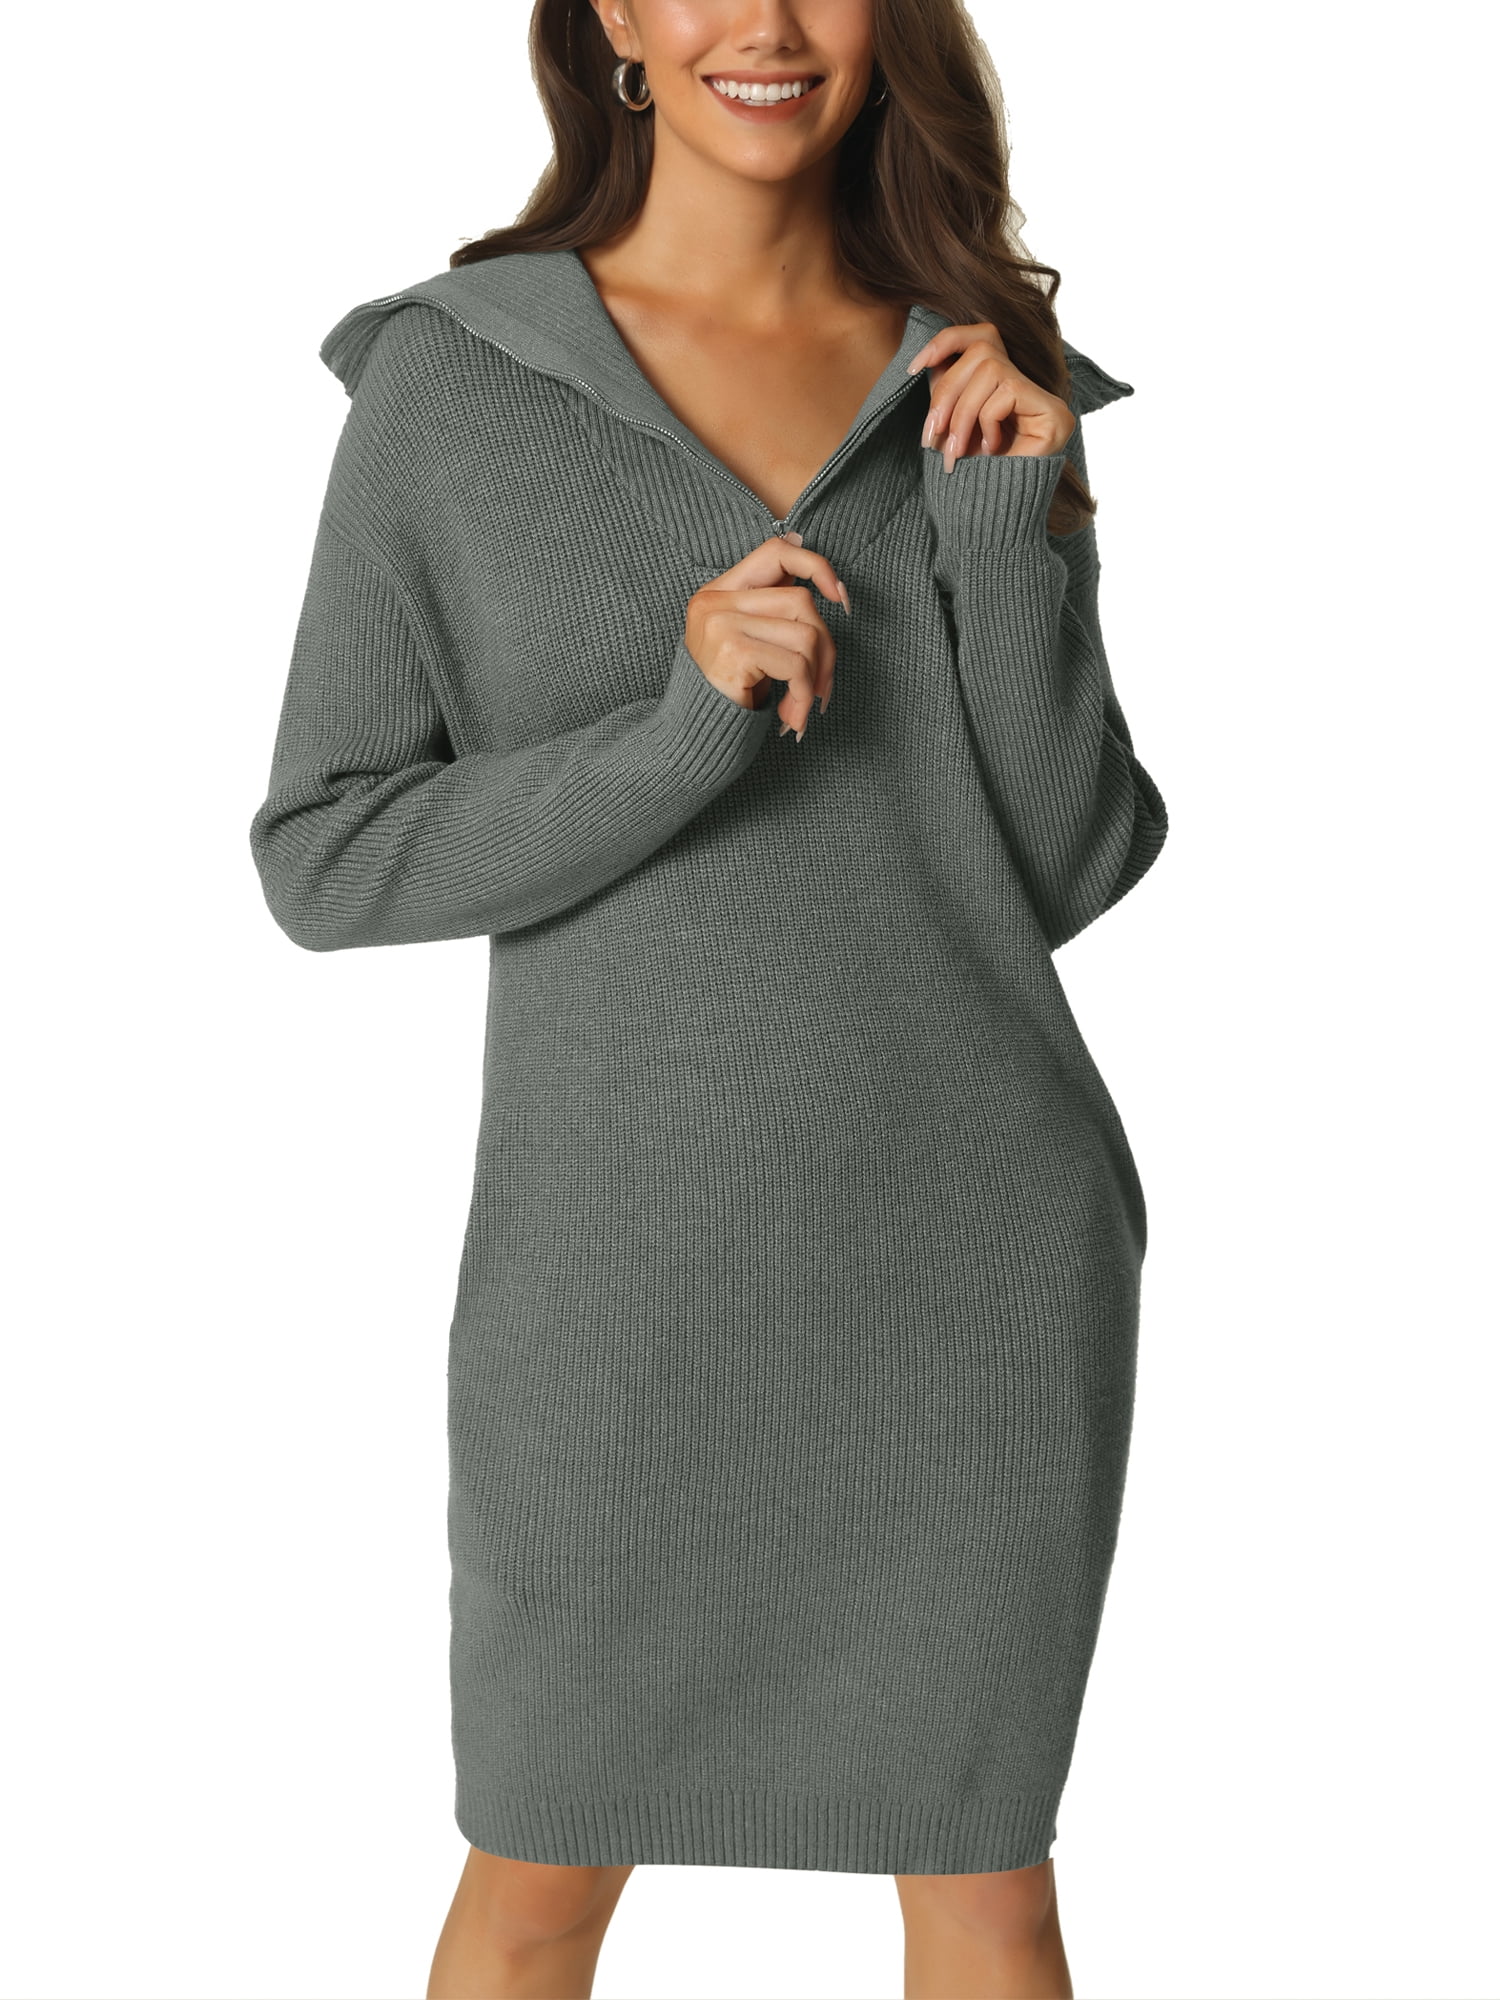 PMUYBHF Sweater Dress Long for Women Womens Autumn Winter Casual